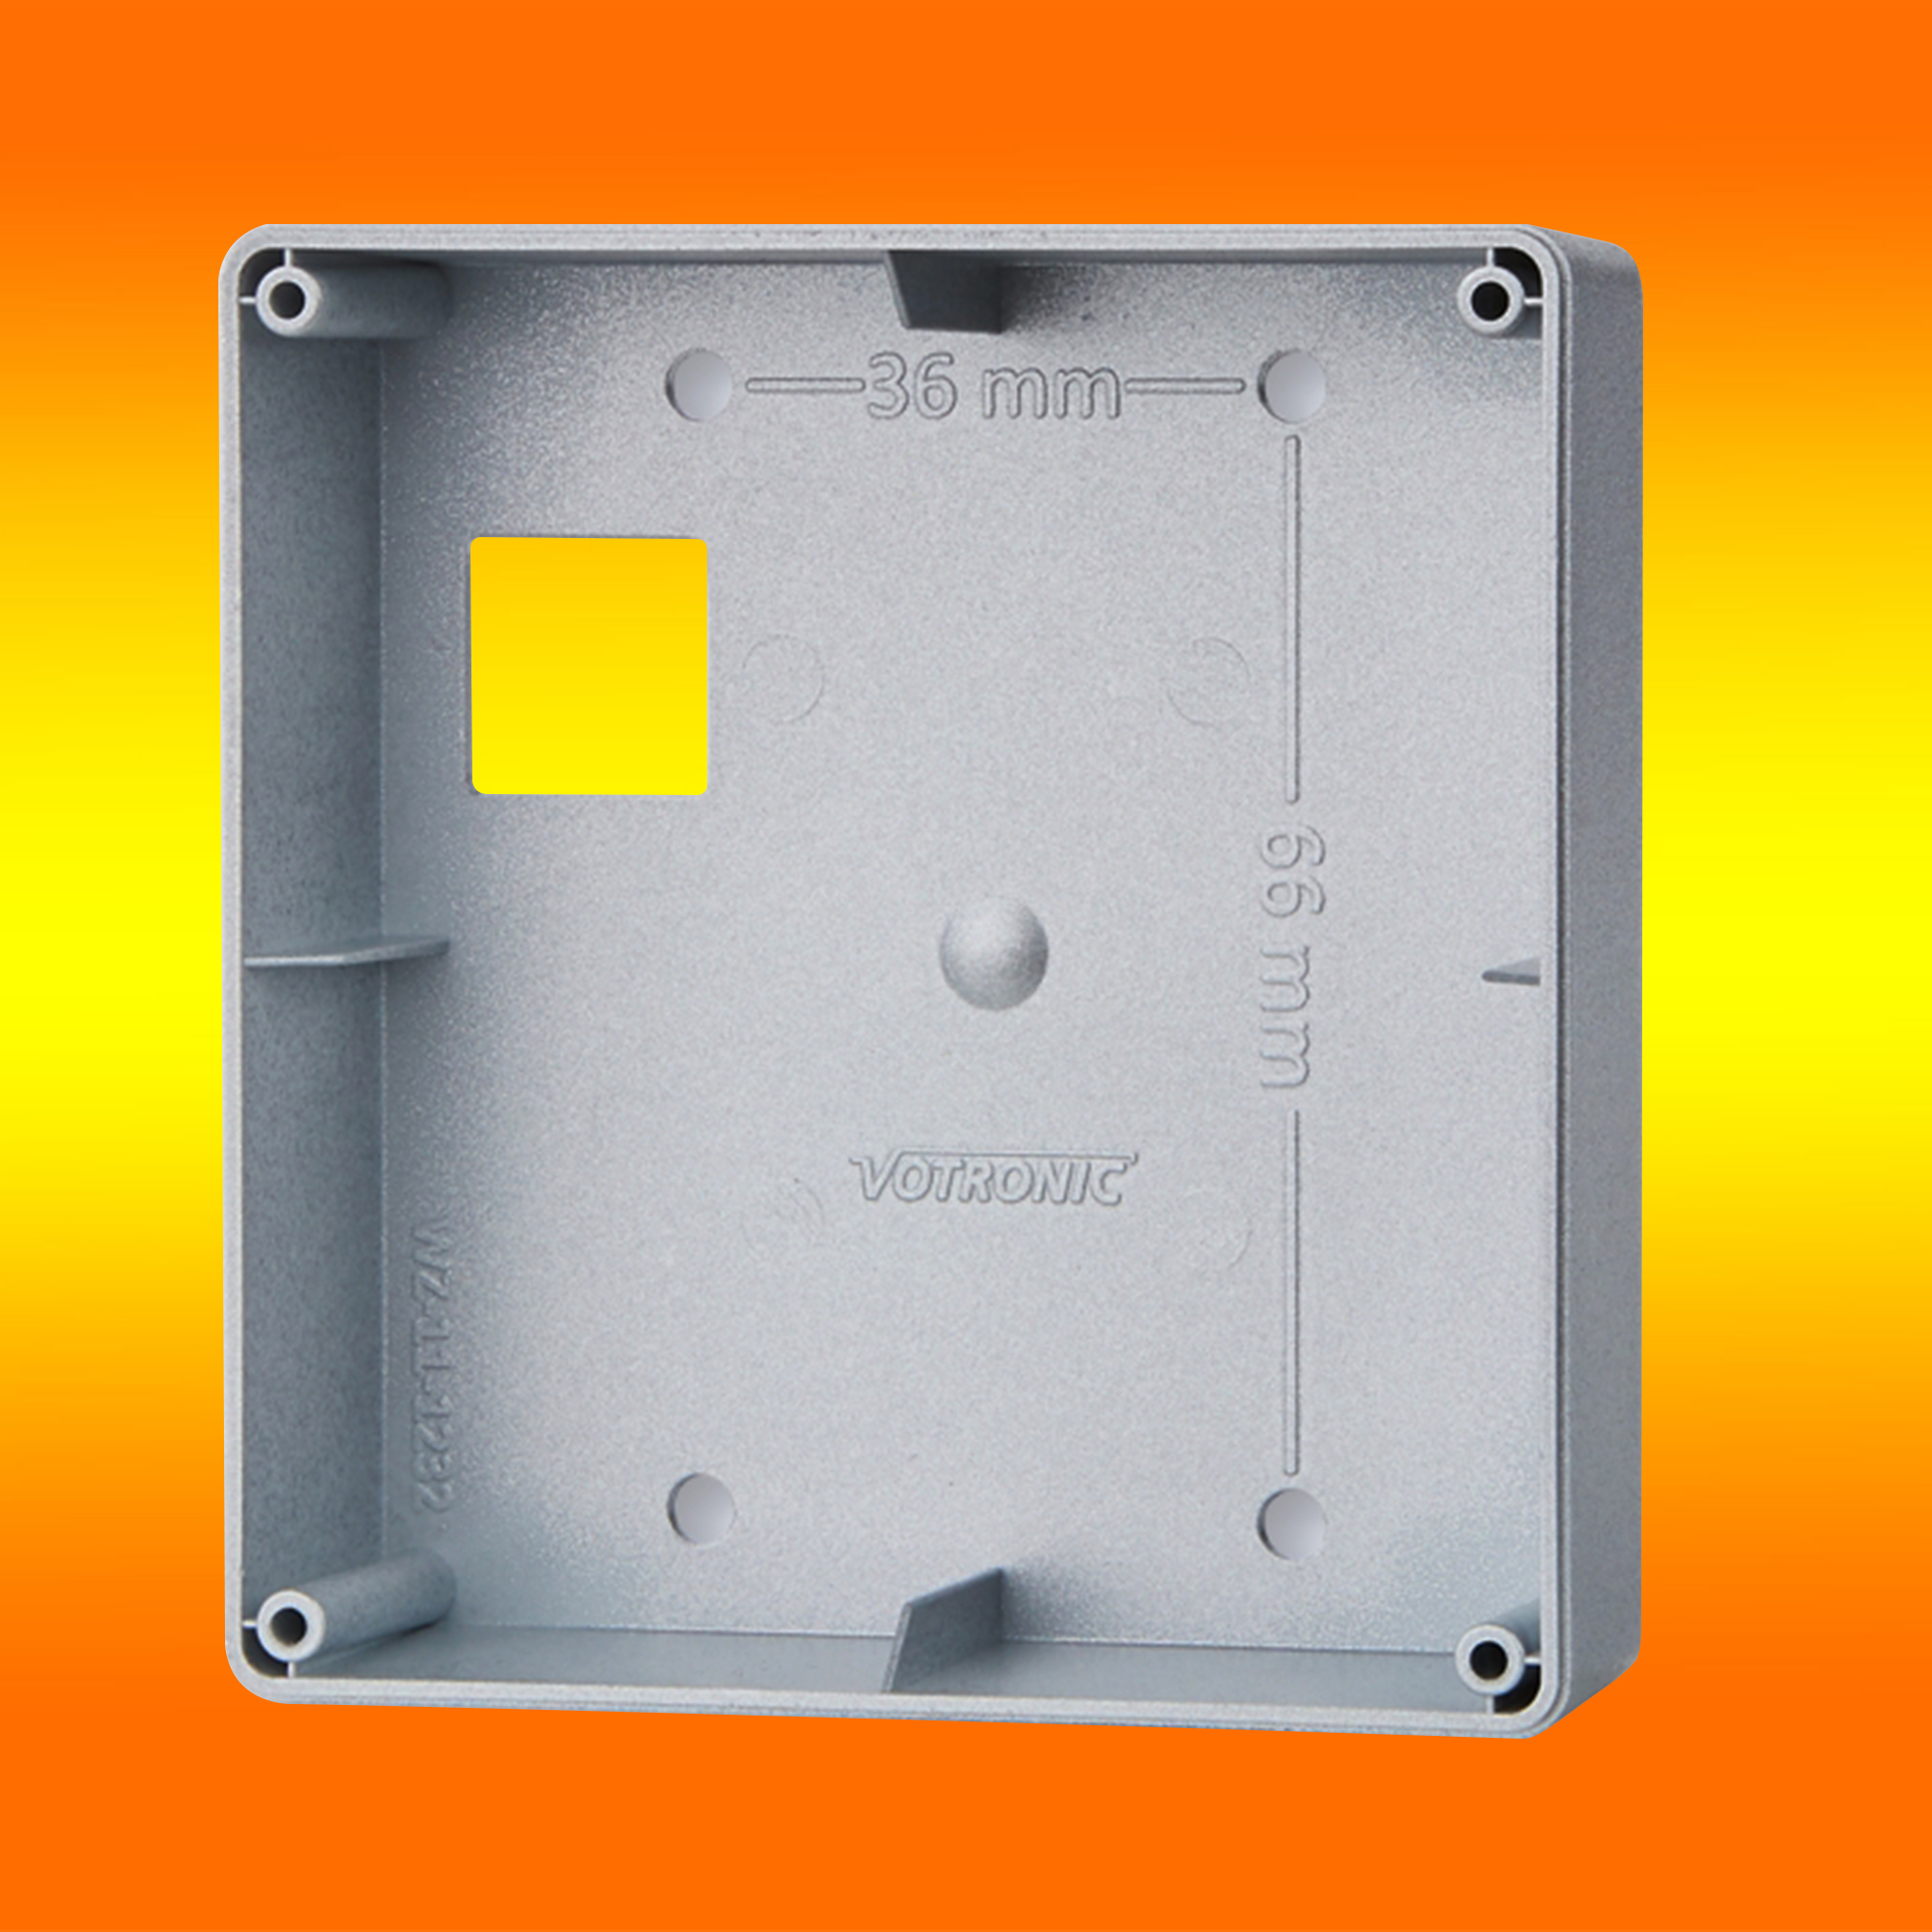 VOTRONIC LCD-Voltmeter S - Spannungsmessgerät